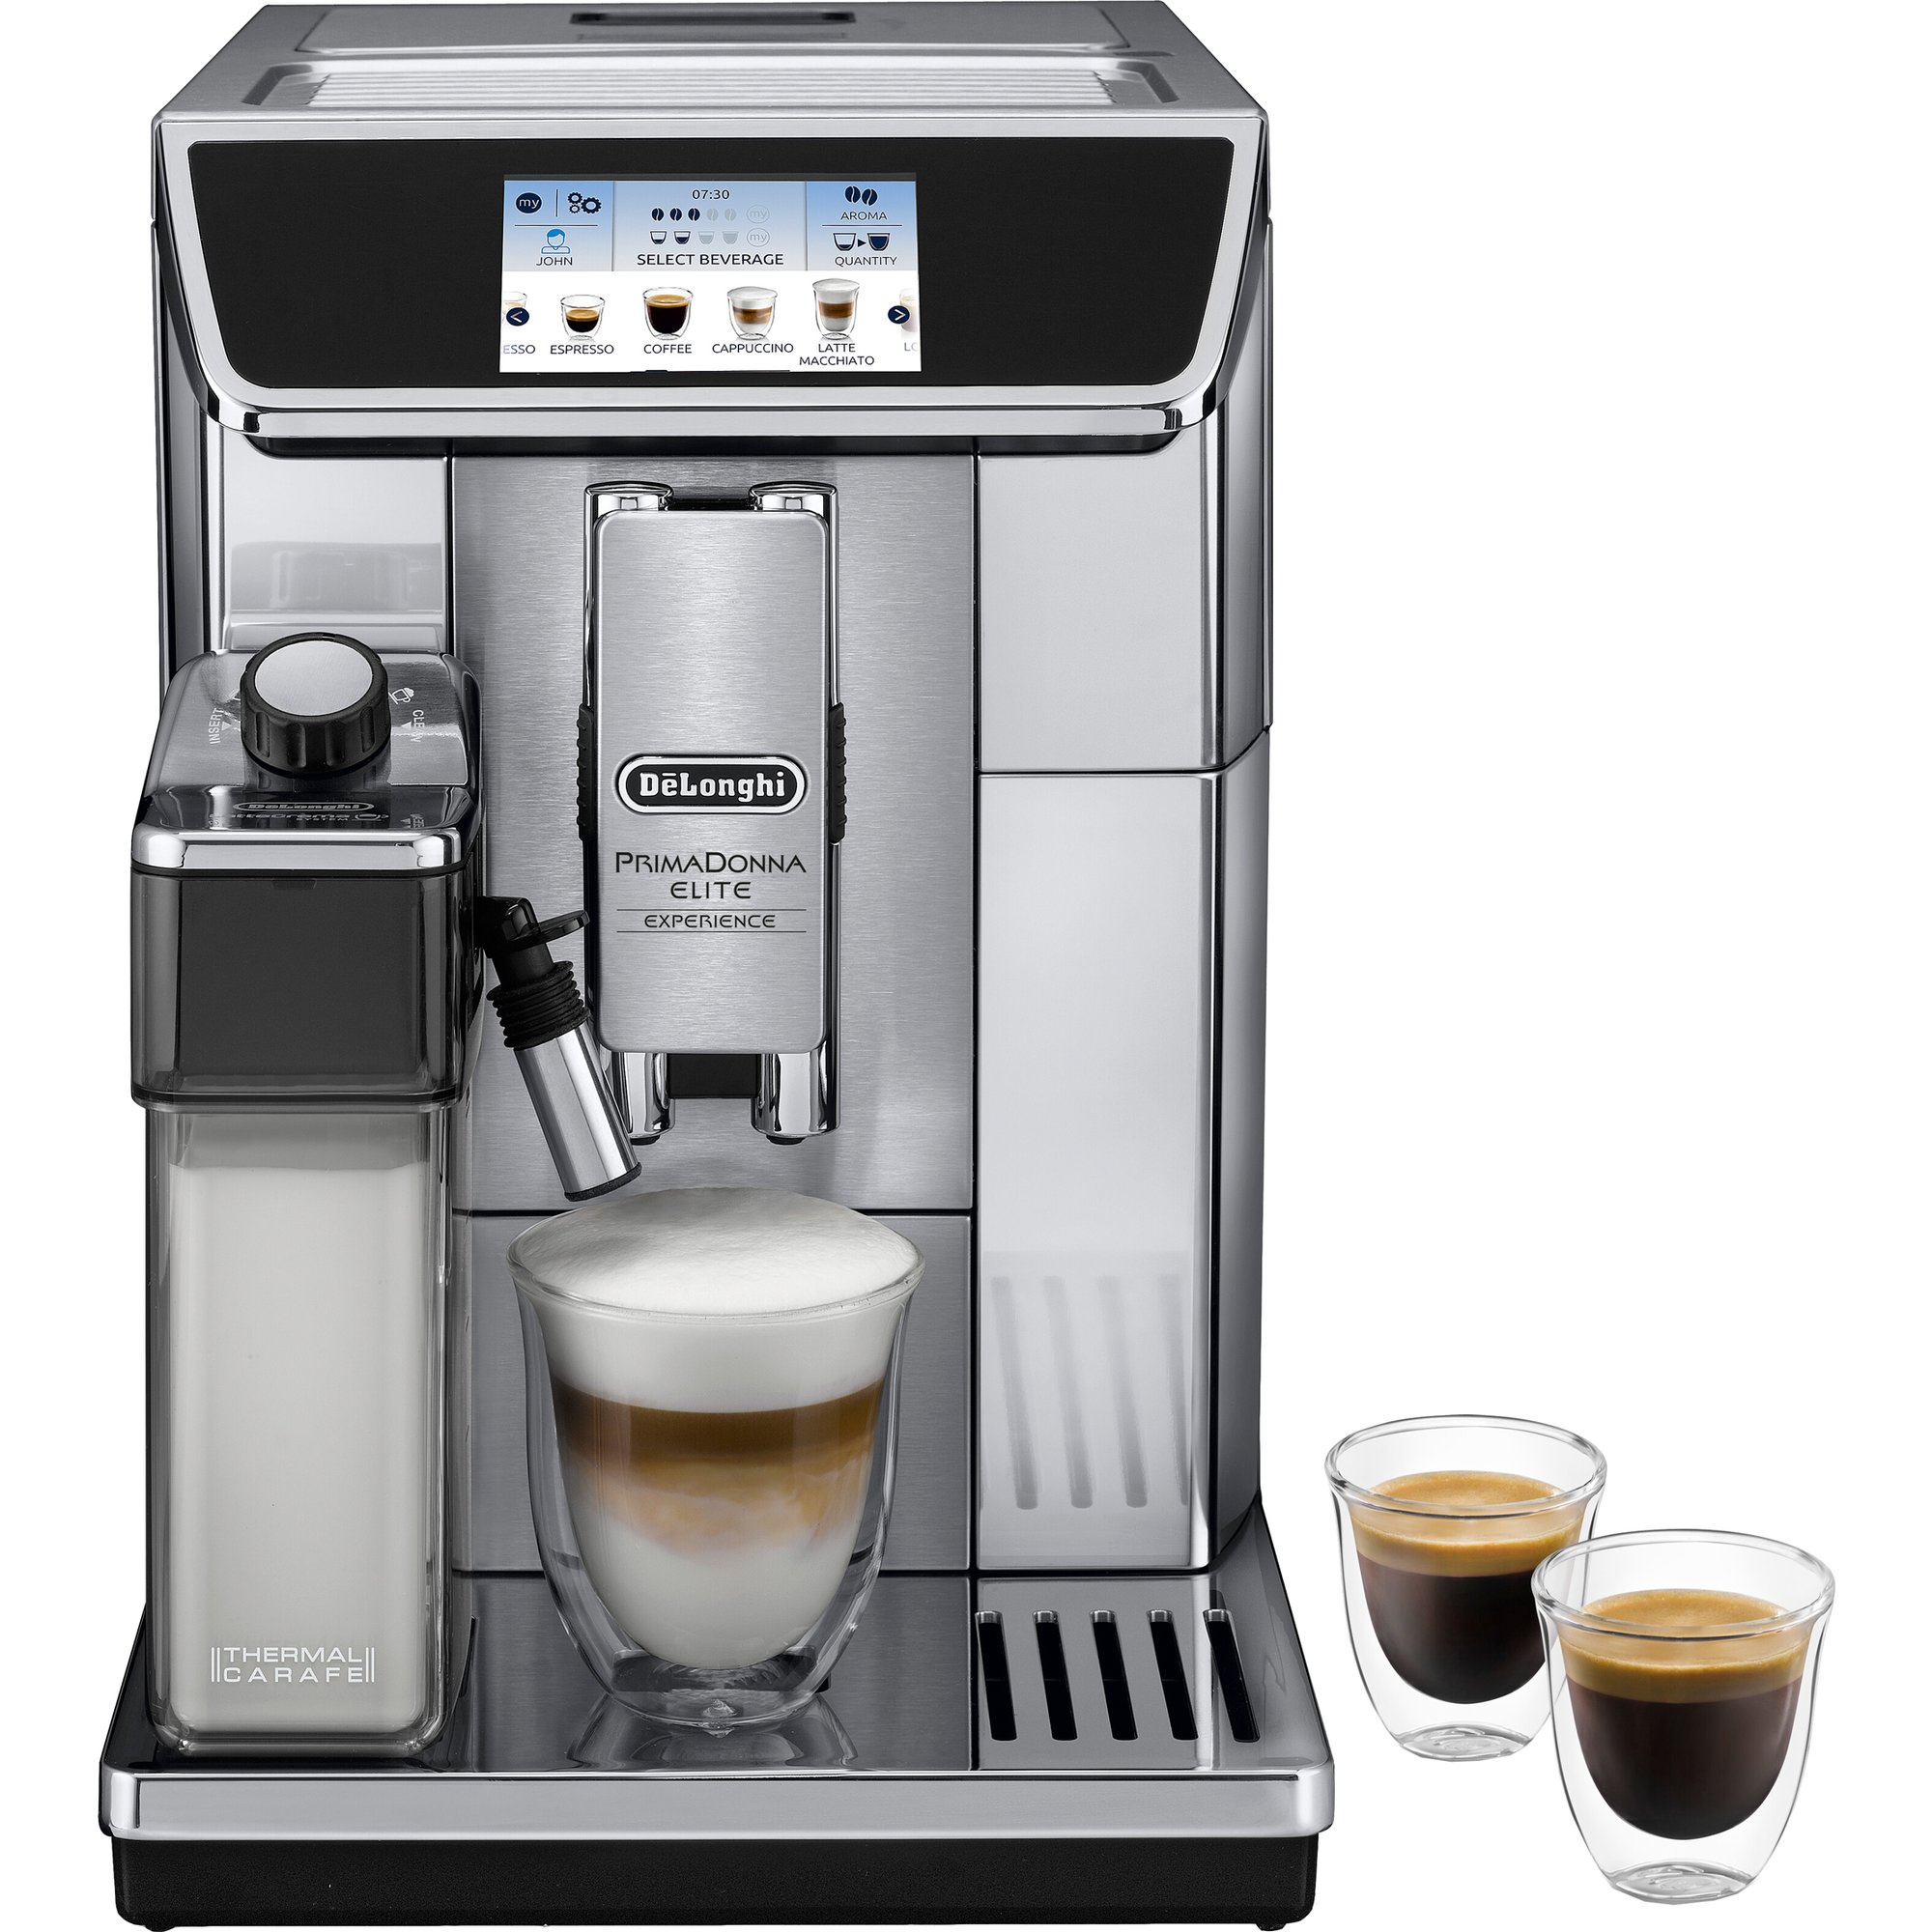 DeLonghi PrimaDonna Elite Experience kaffemaskine